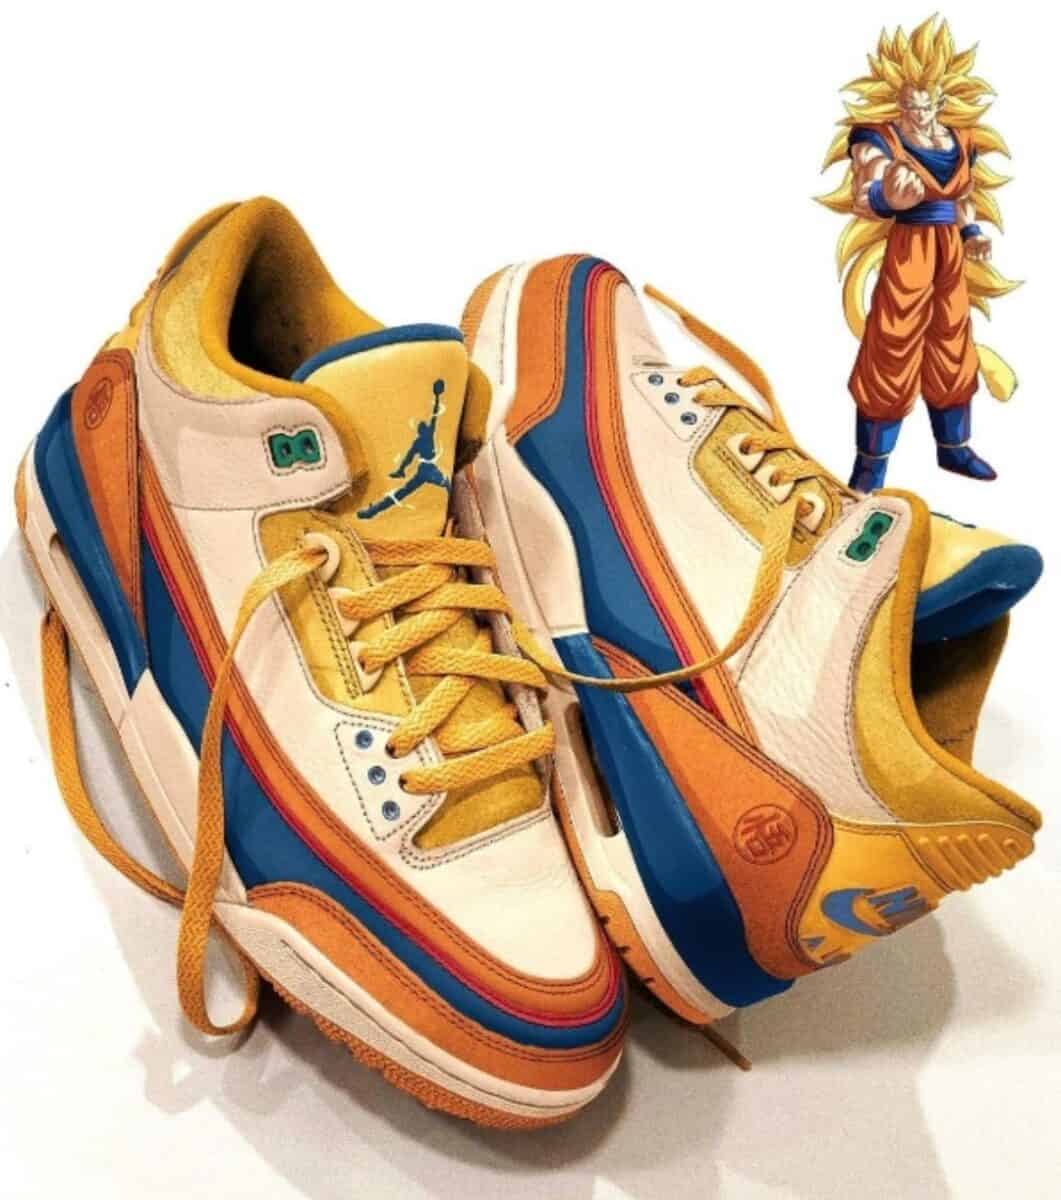 Goku nike sneakers Dragon Ball Z